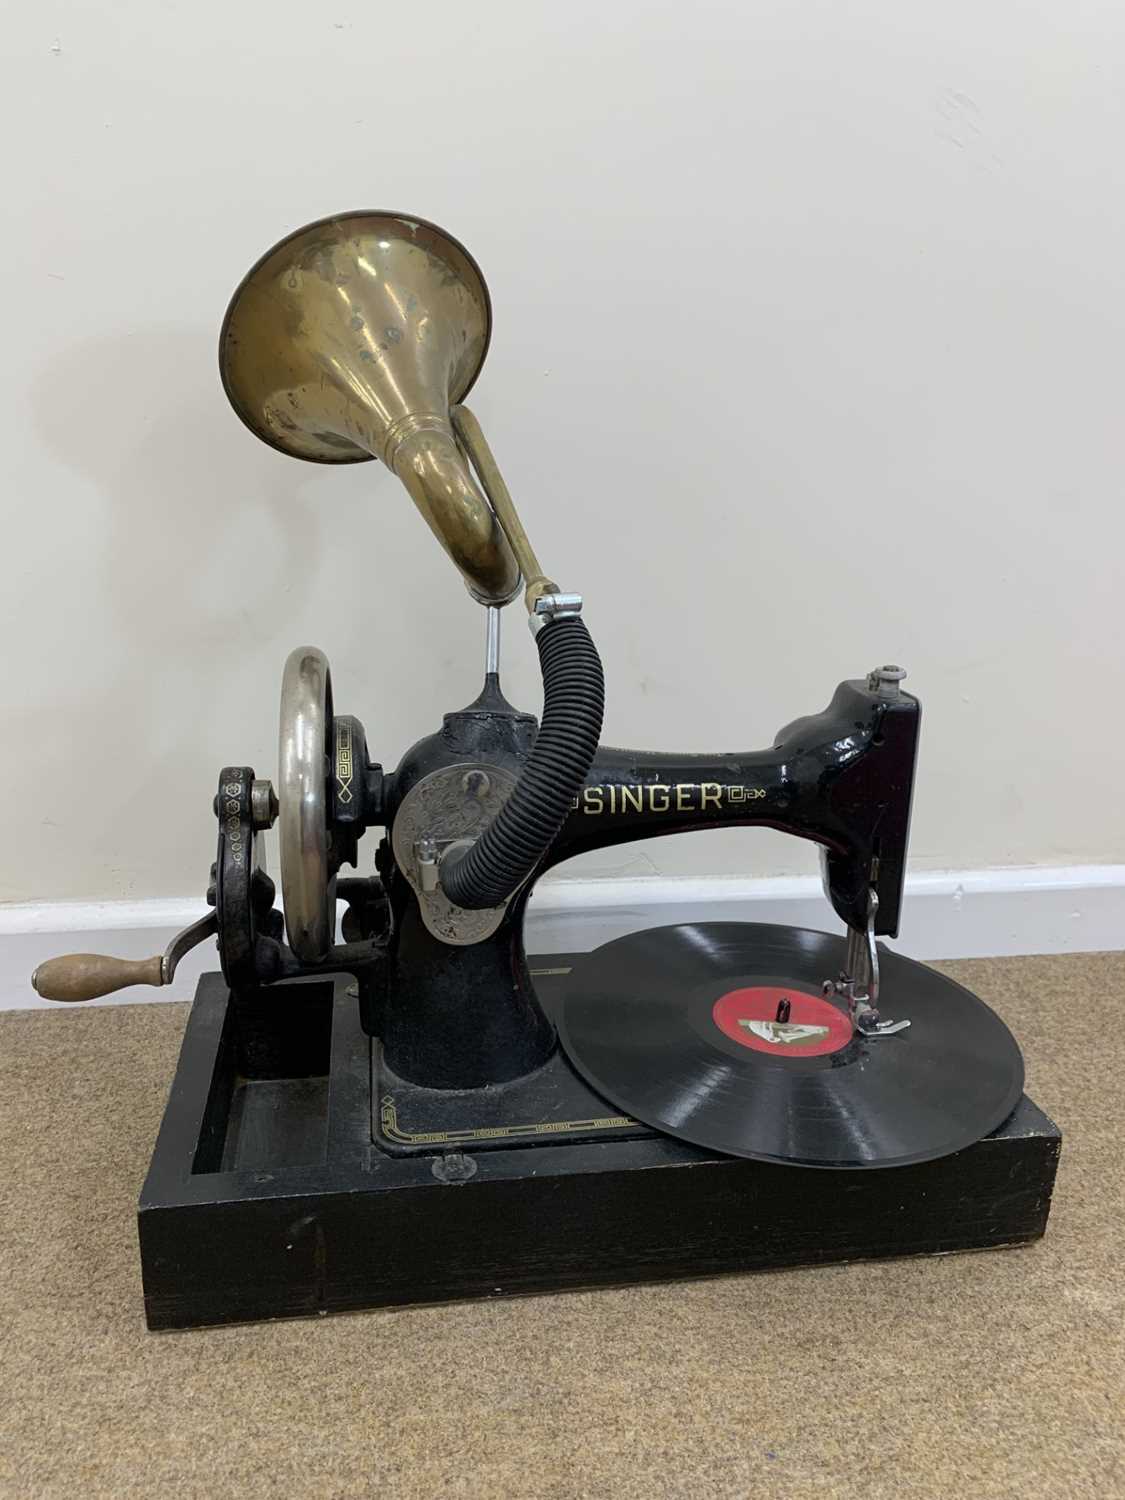 David Chedgey (British, b.1940), Record player Singer sewing machine, kinetic sculpure, 43x51cm